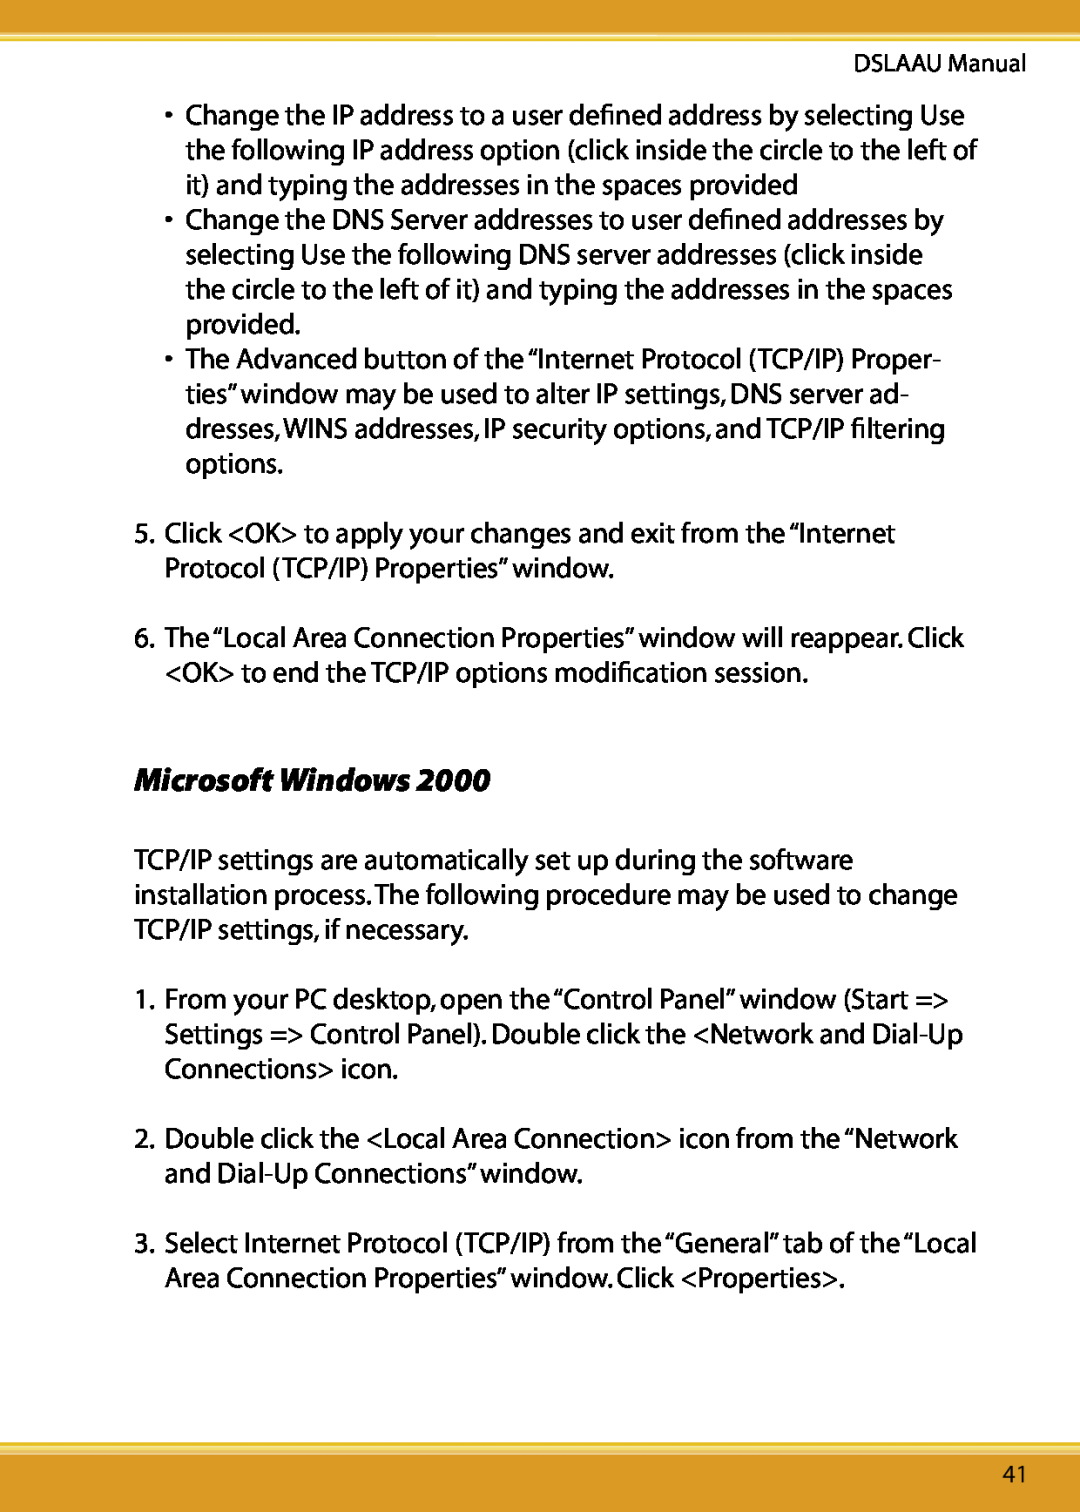 Corega user manual Microsoft Windows, DSLAAU Manual 